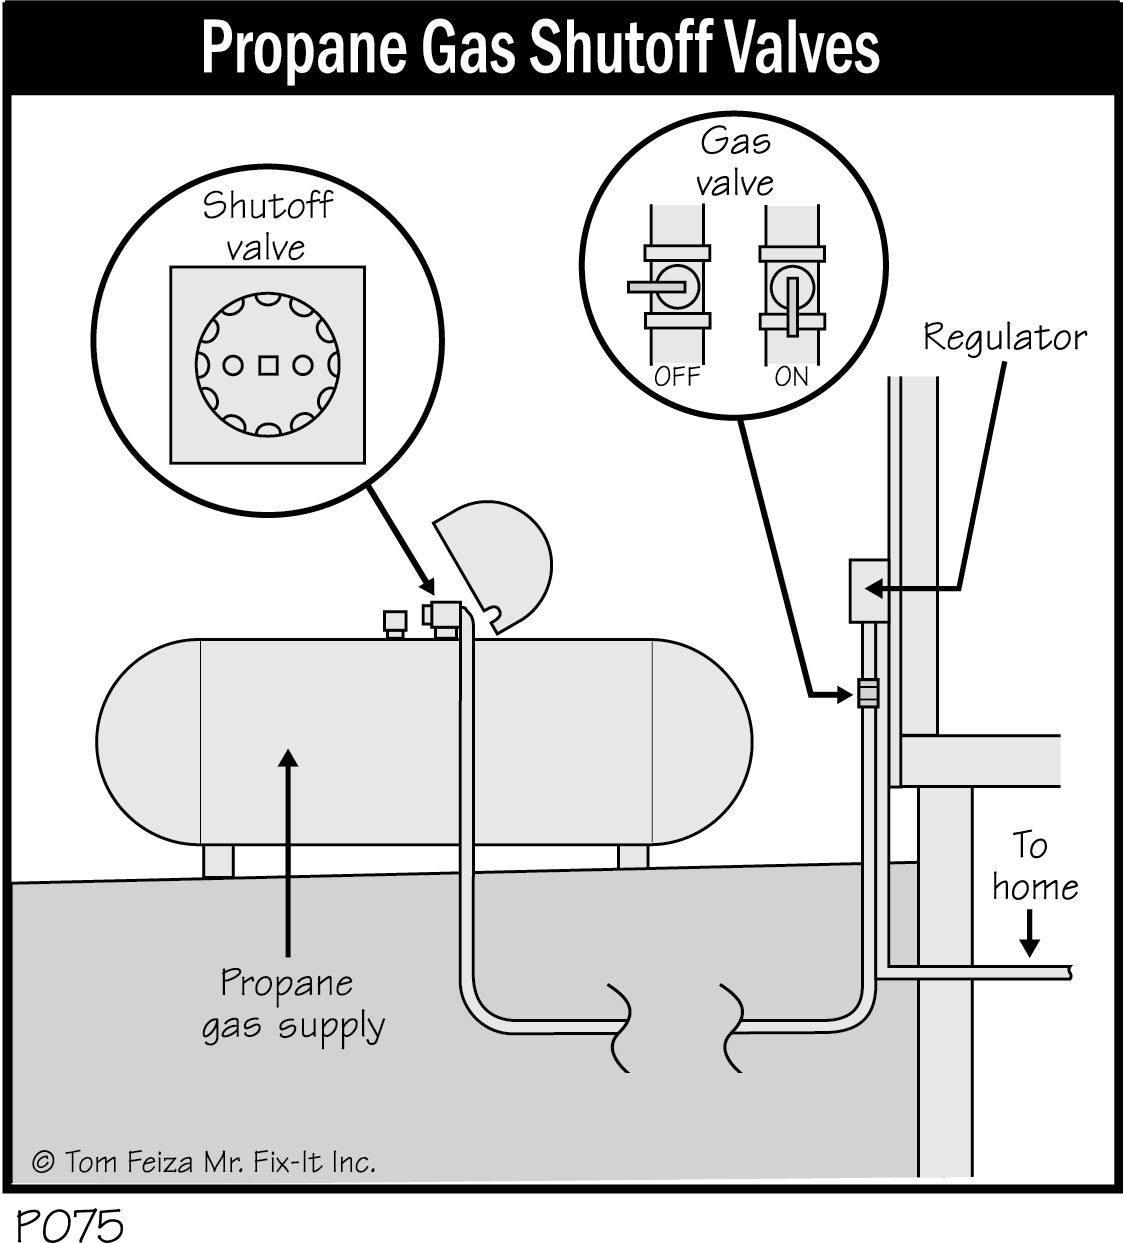 P075 - Propane Gas Shutoff Valves